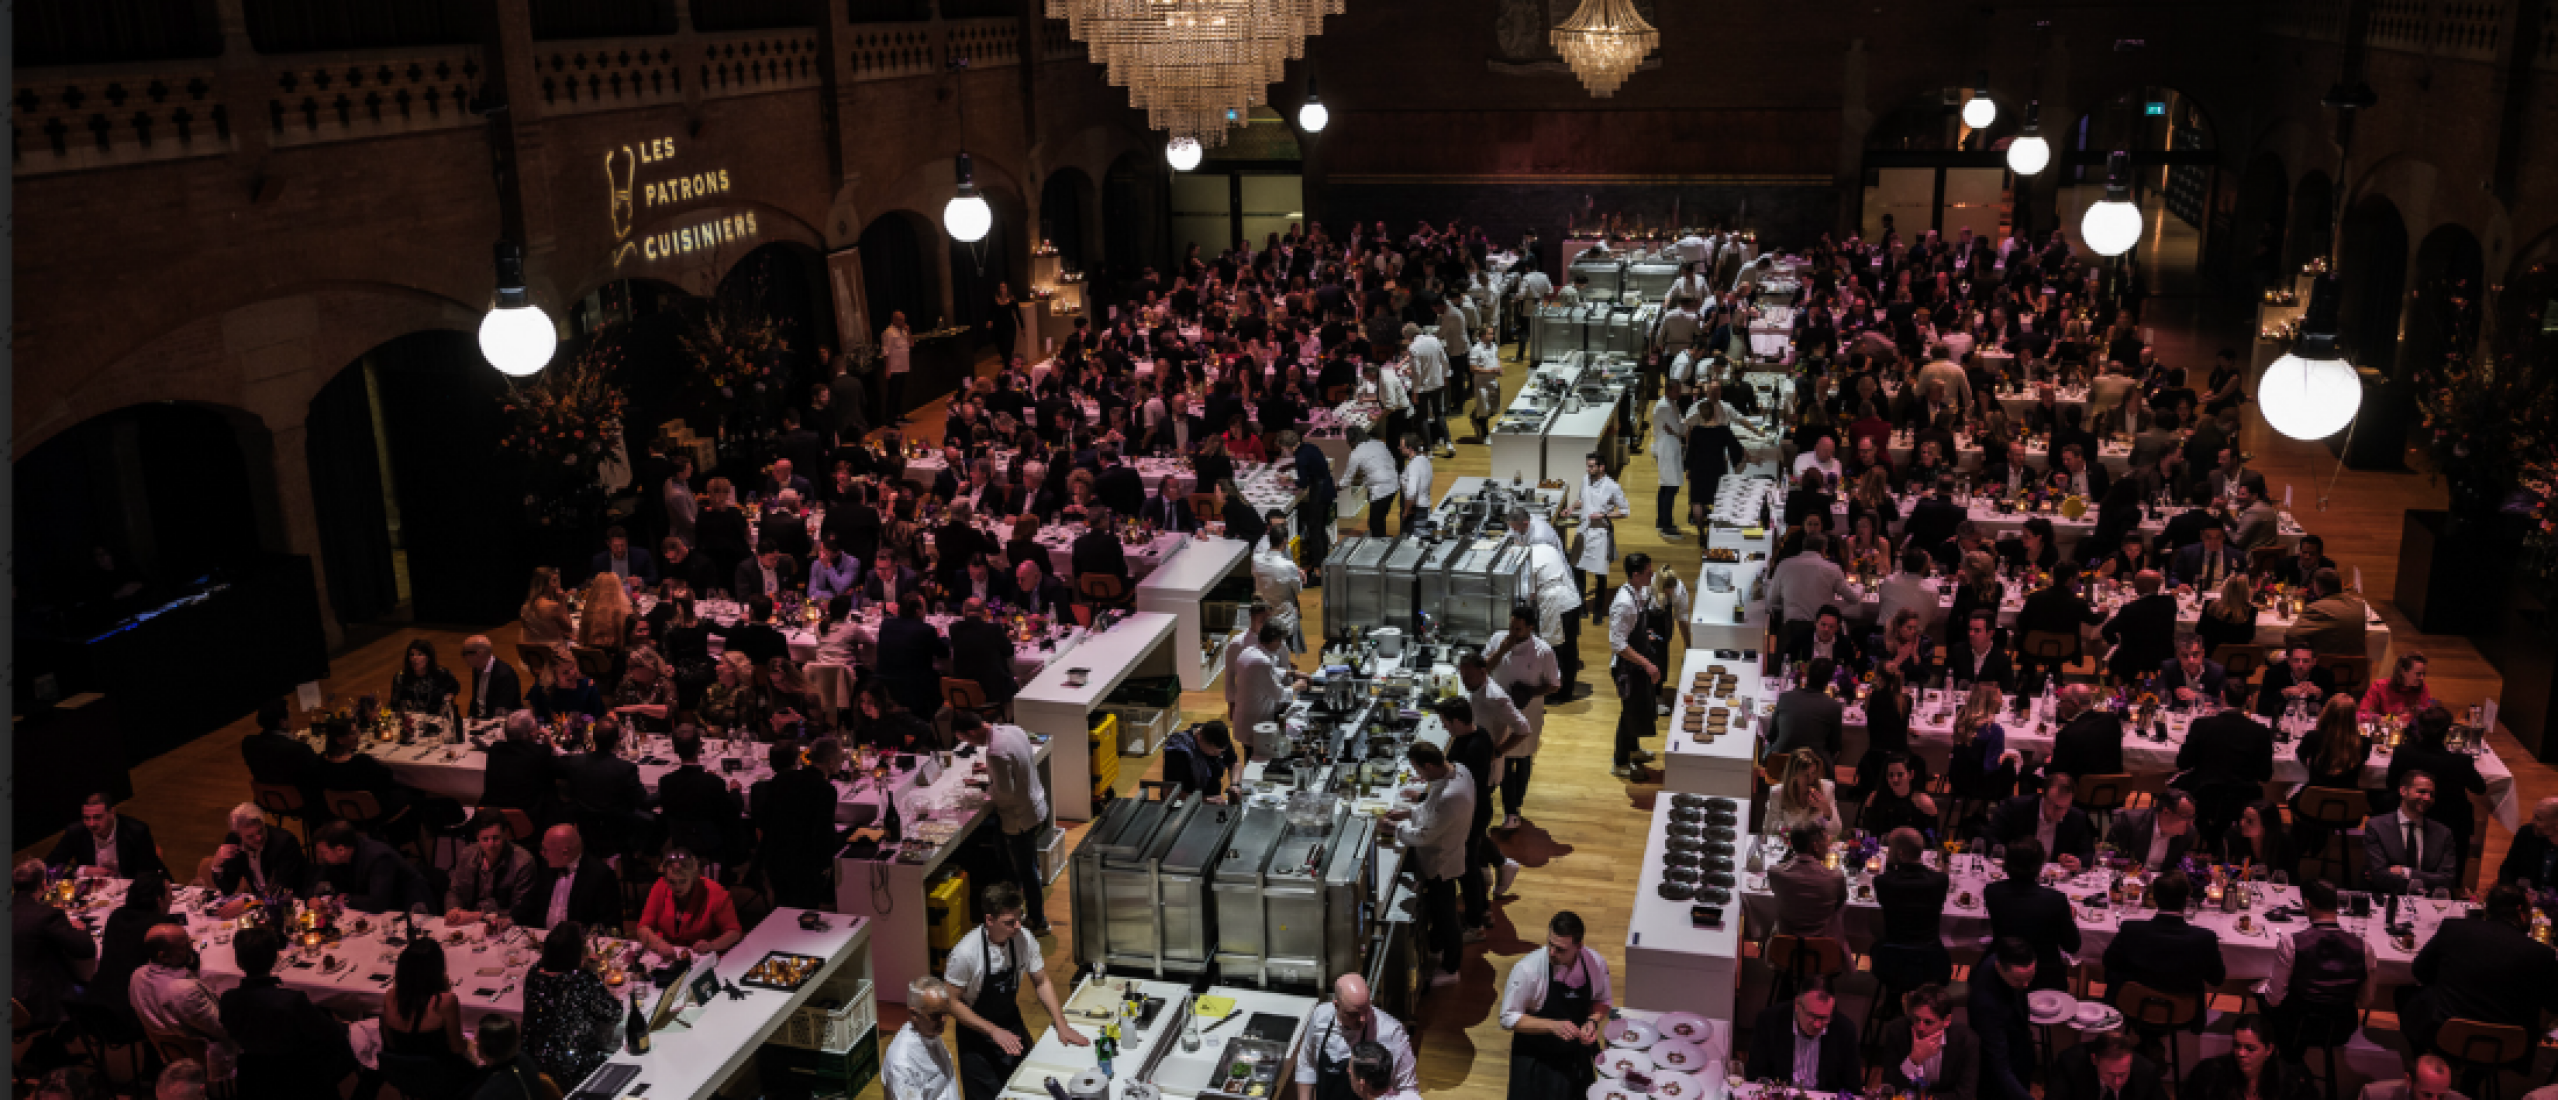 Les Patrons Cuisiniers: Grootste chef’s table ter wereld in Amsterdam